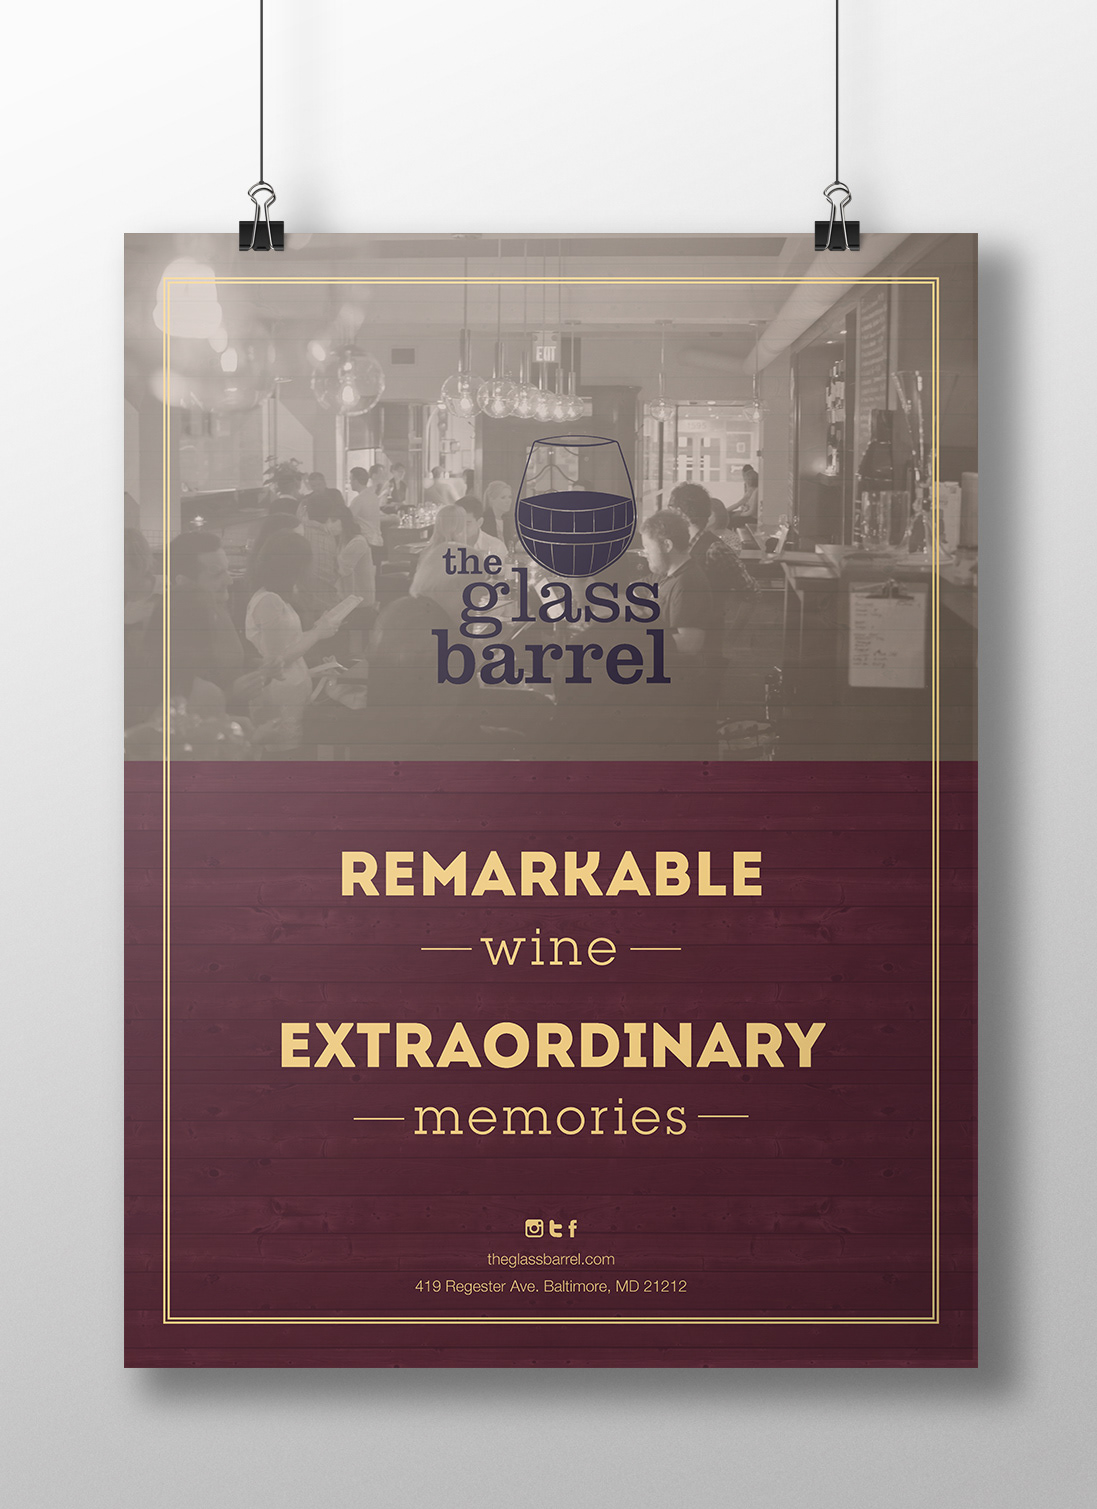 wine bar logo menu business card poster wood